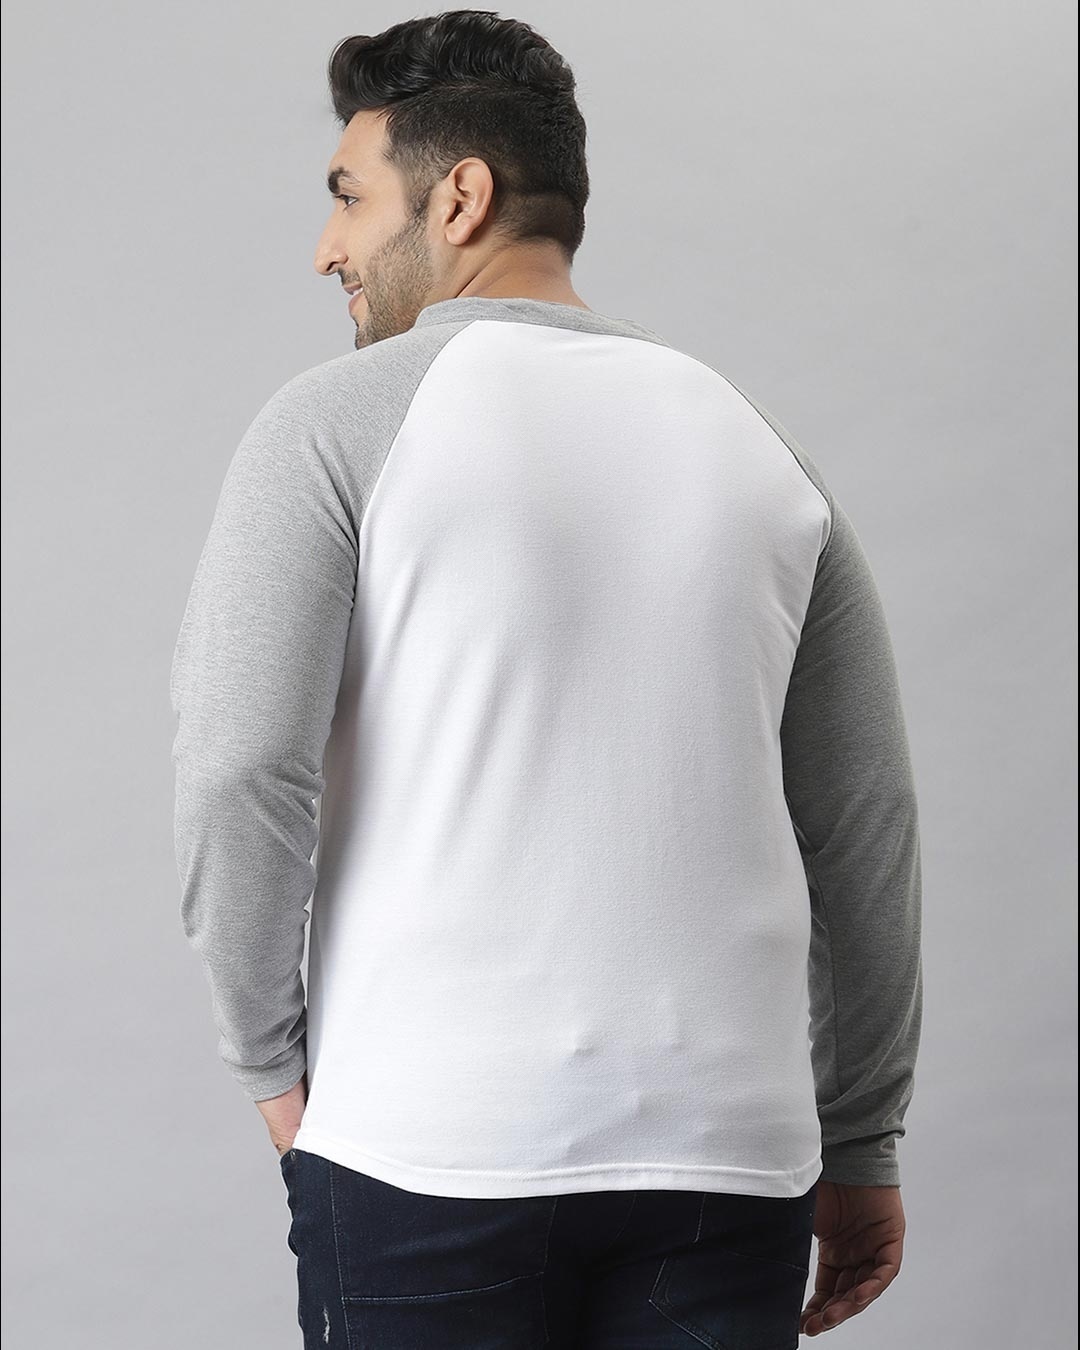 Shop Men's White Colorblocked Stylish Full Sleeve Casual Shirt-Back